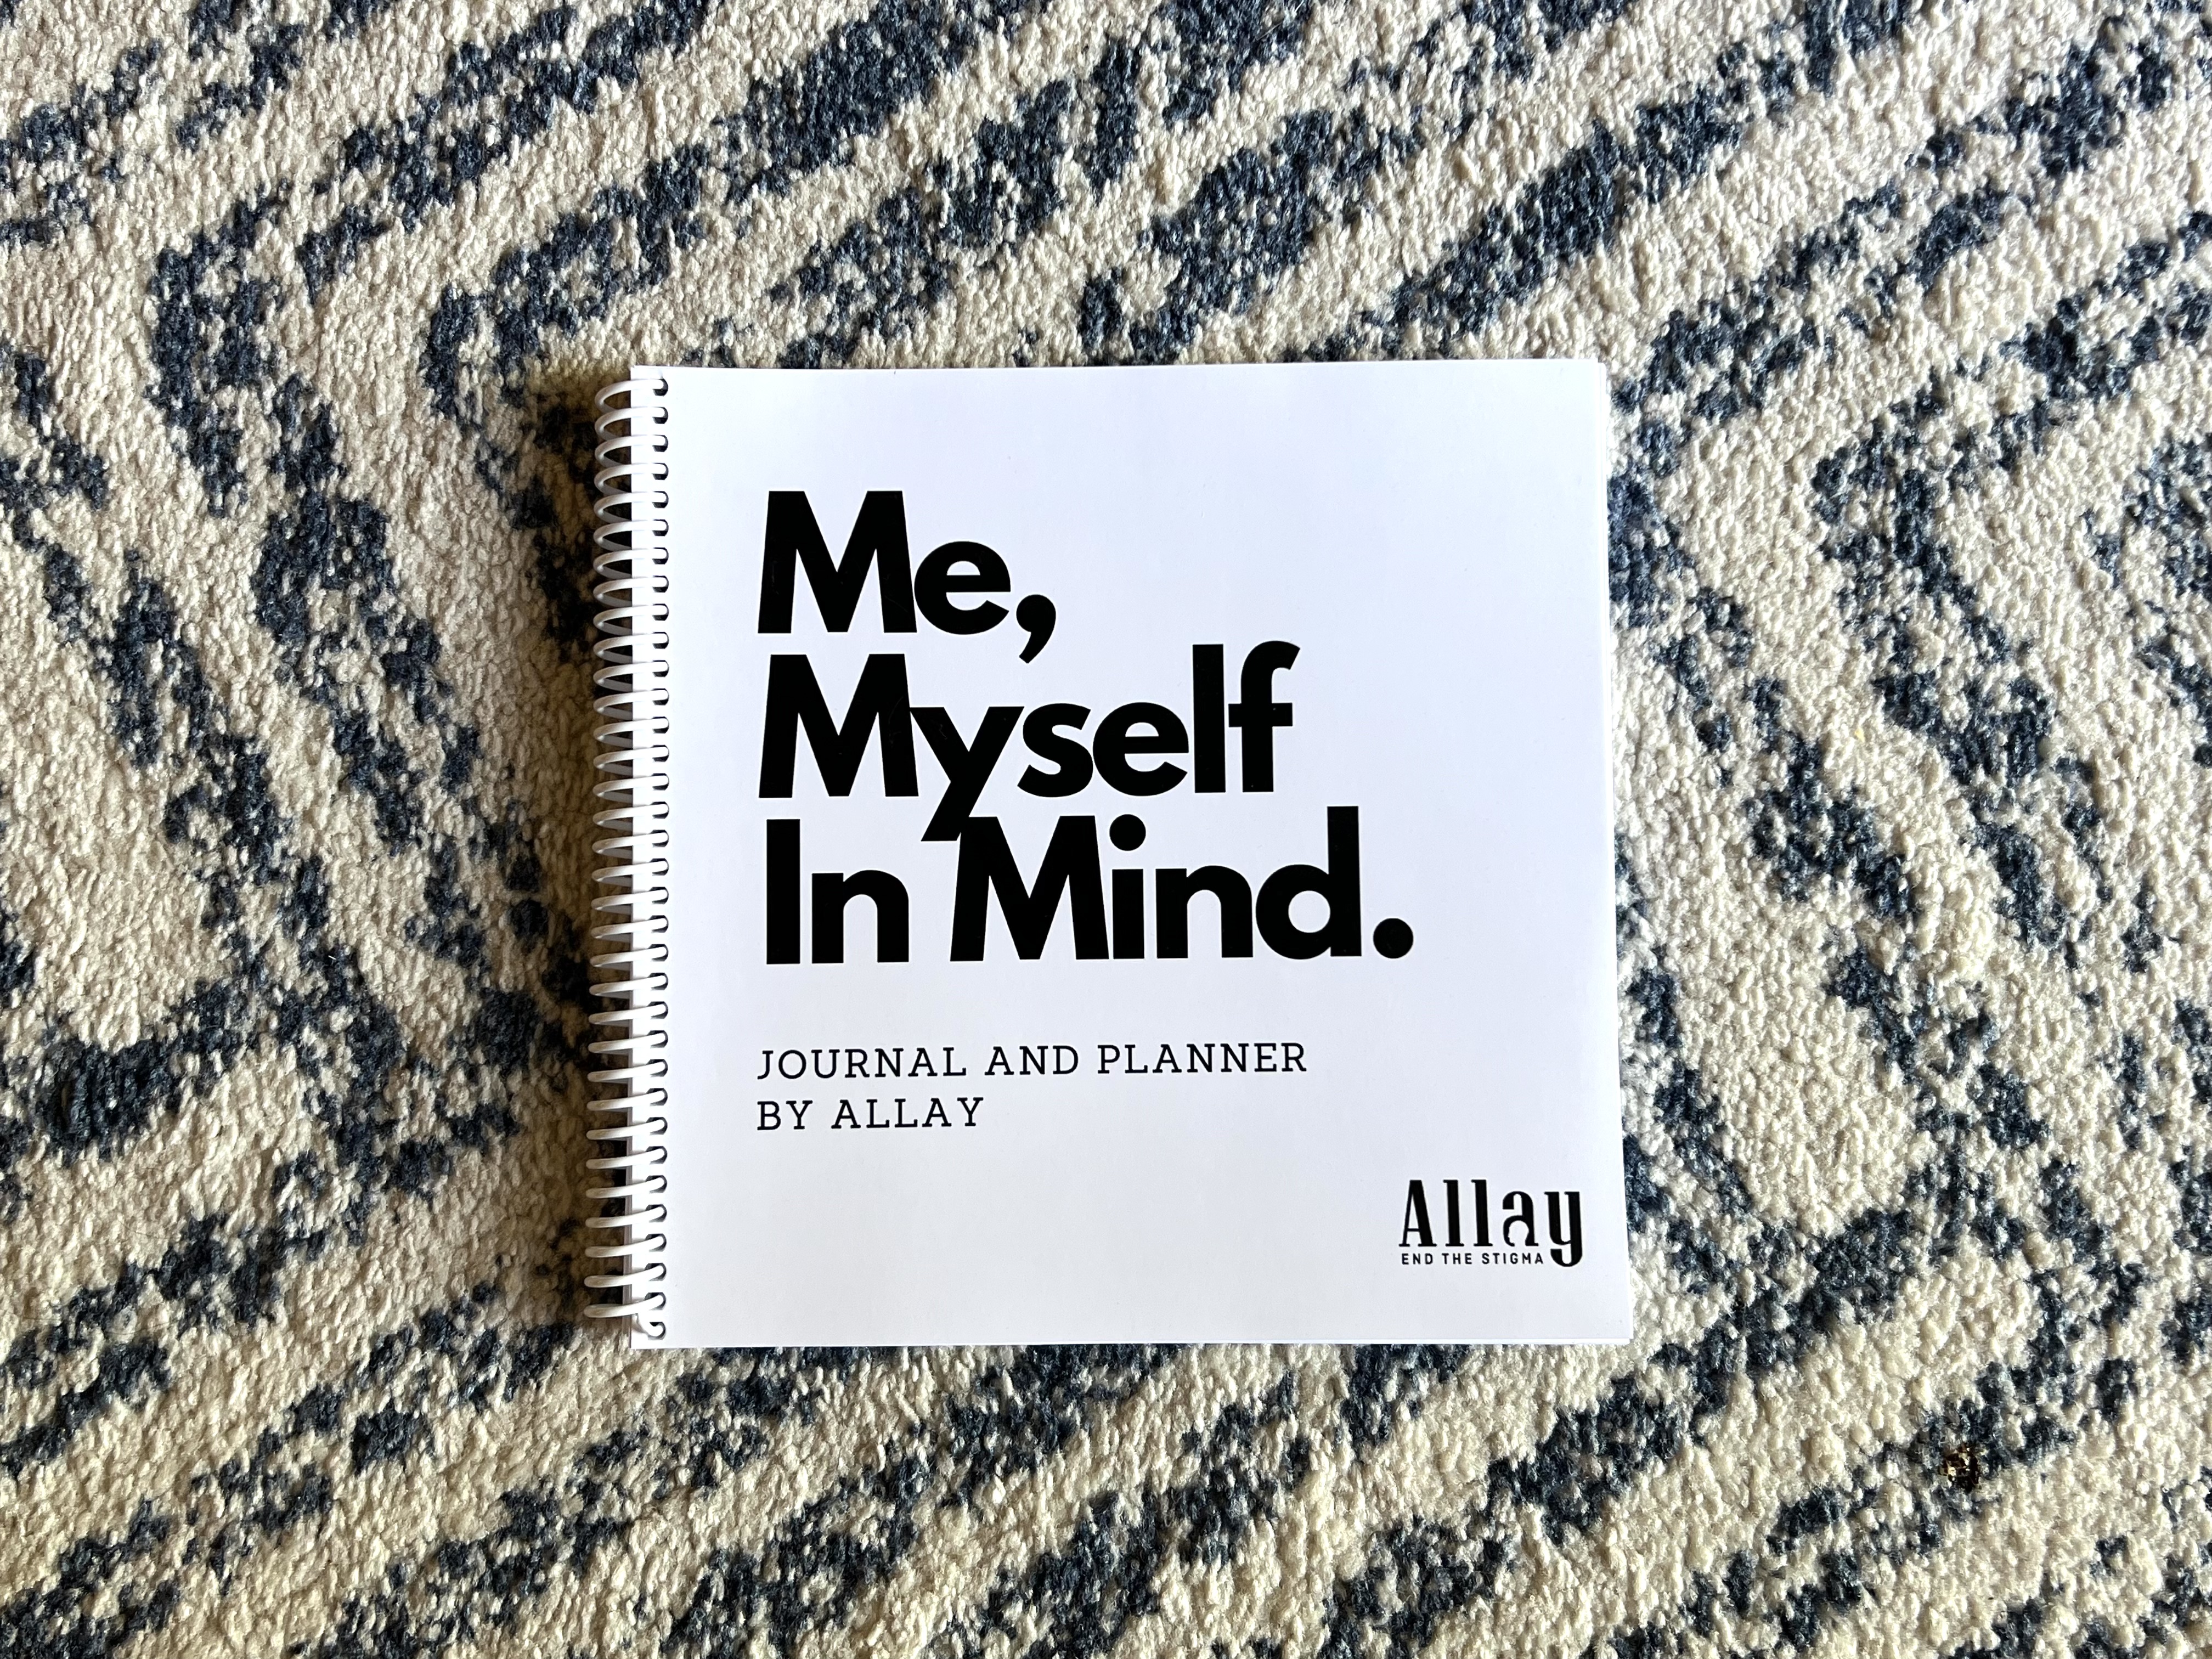 "Me, Myself In Mind" book cover